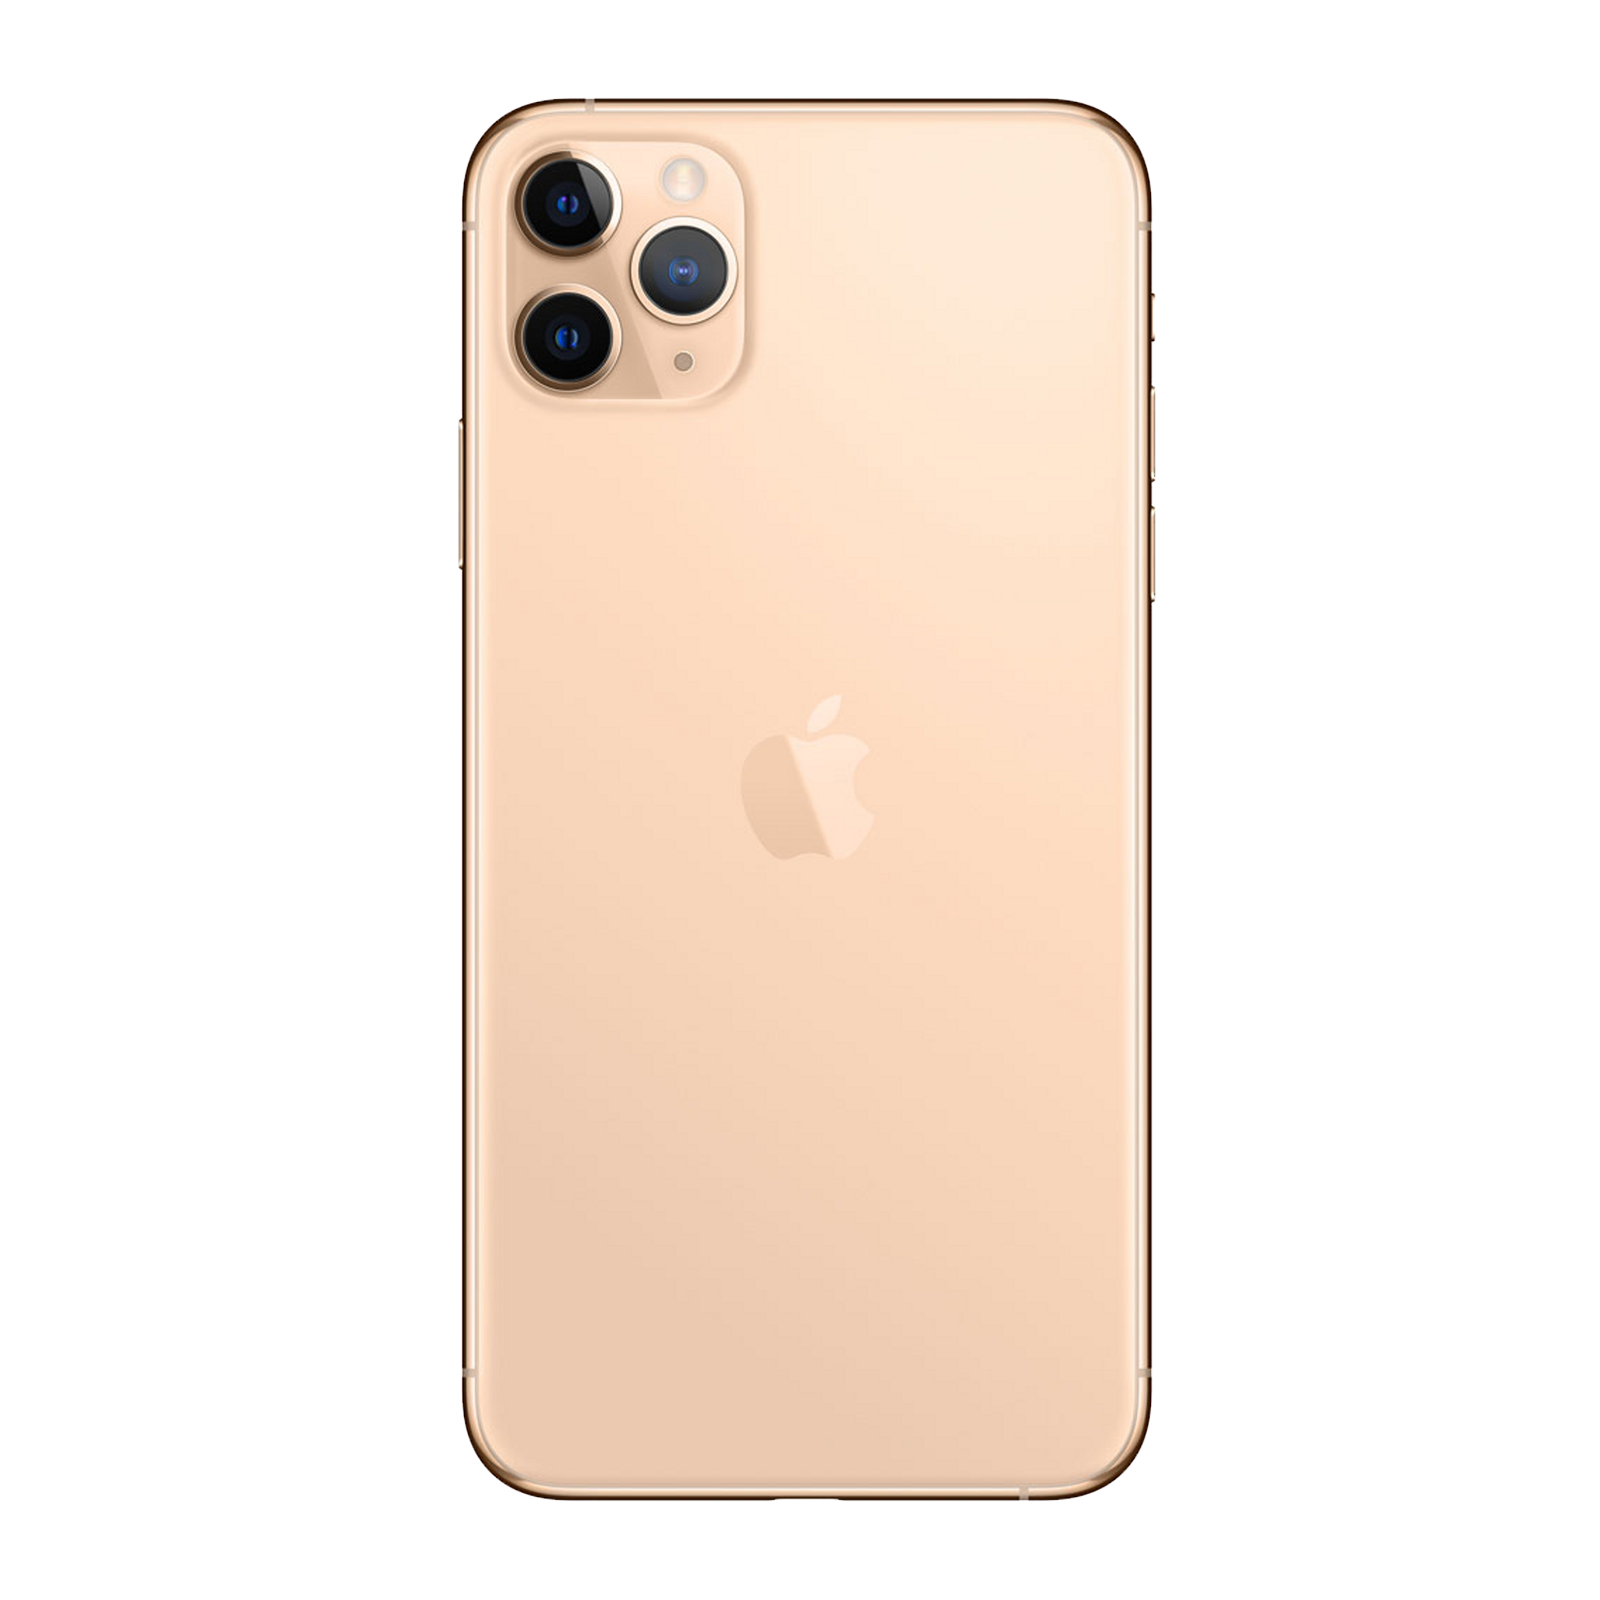 iPhone 11 Pro 64GB Gold Pristine - Unlocked